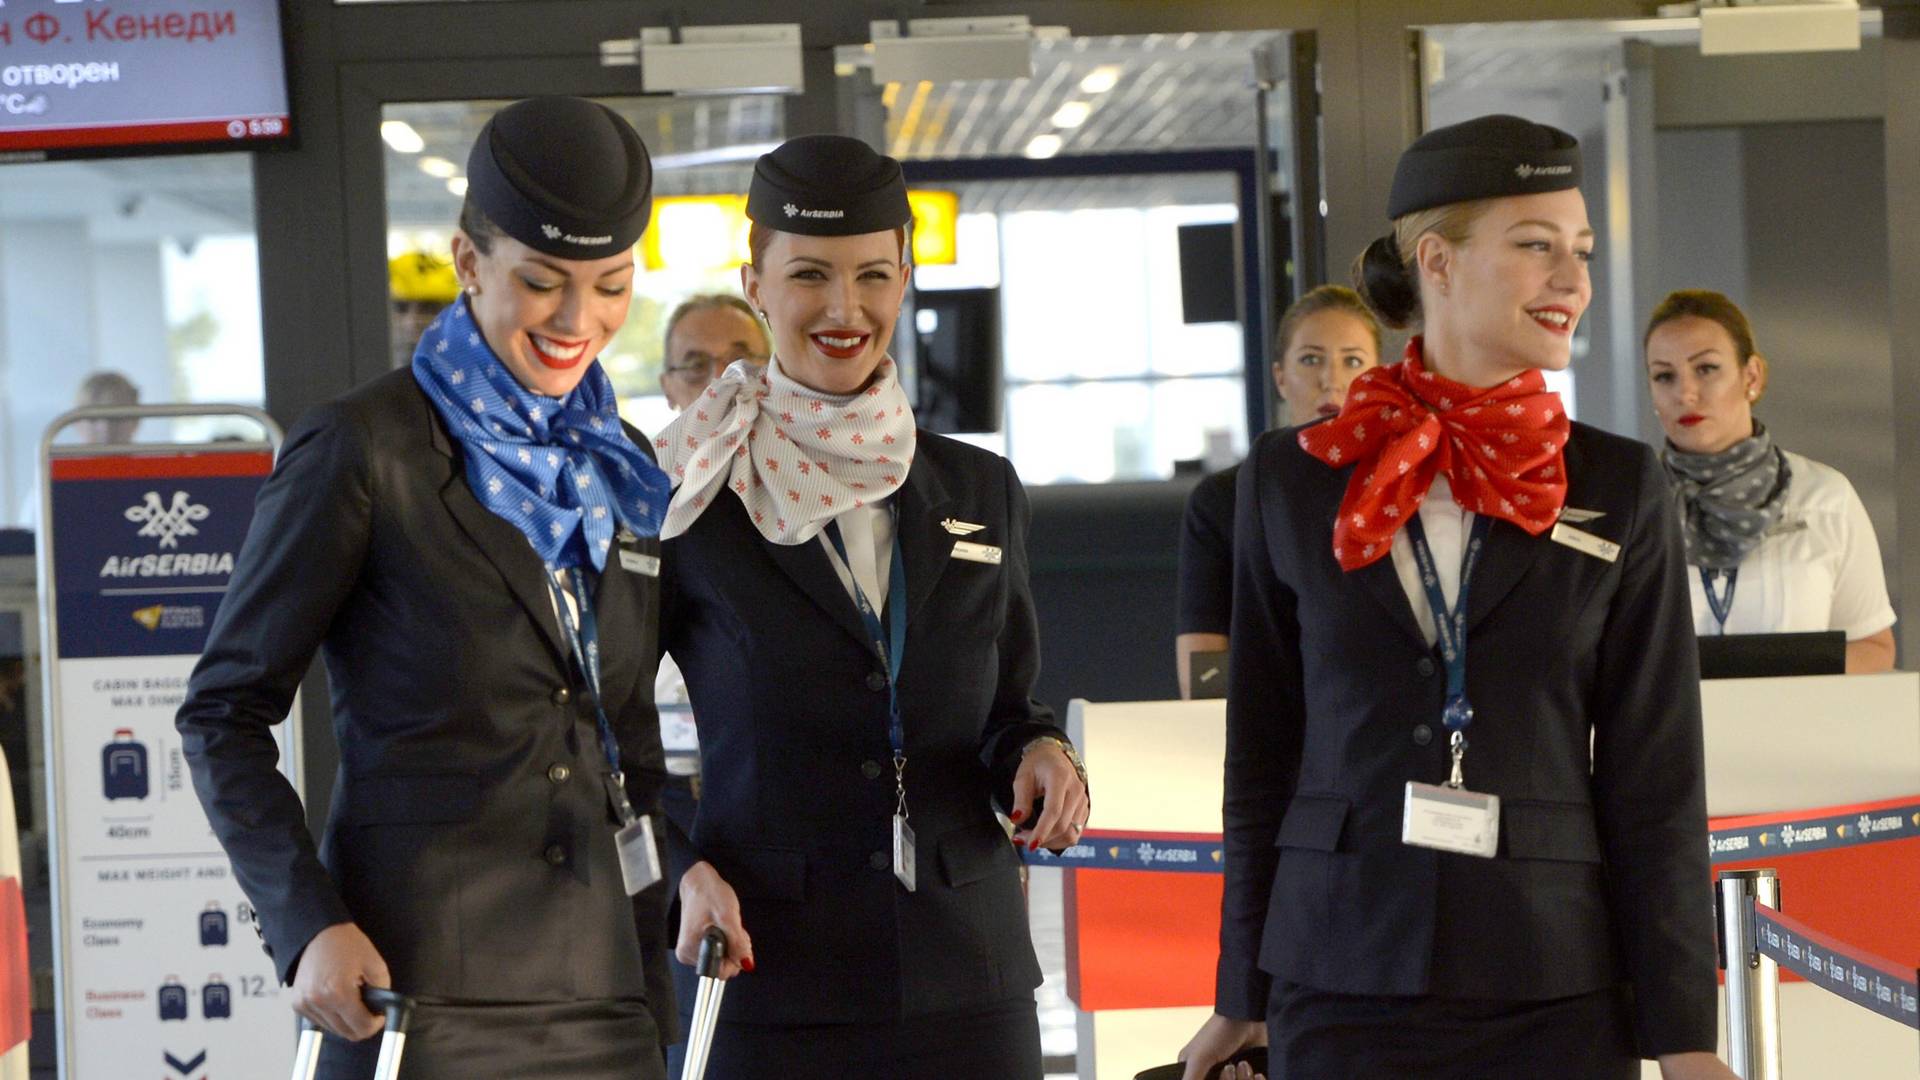 Srpkinje na listi najprivlačnijih stjuardesa sveta